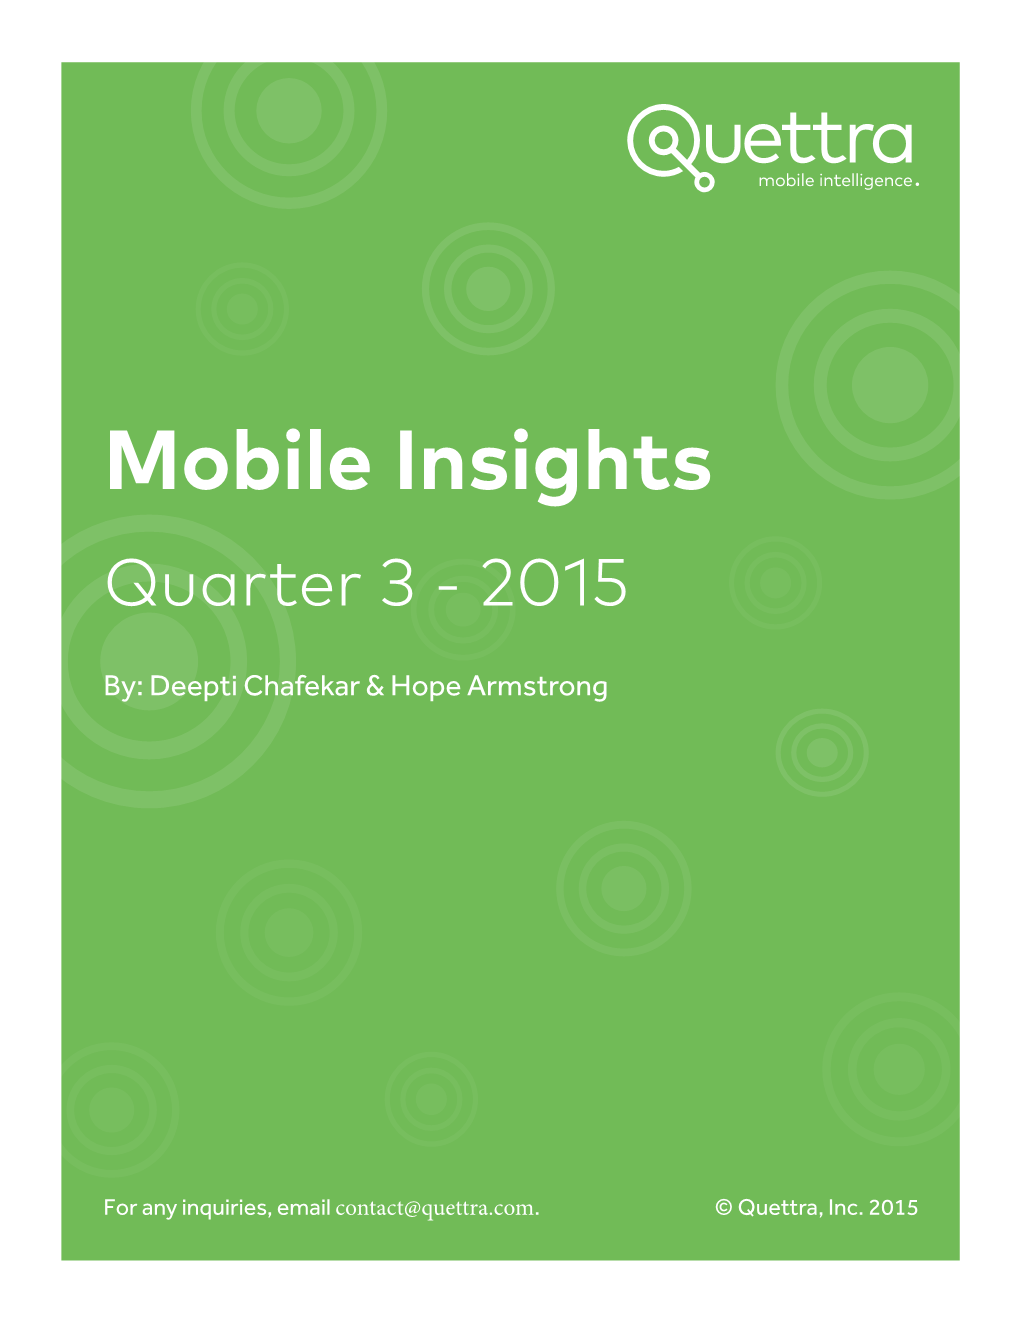 Mobile Insights Quarter 3 - 2015